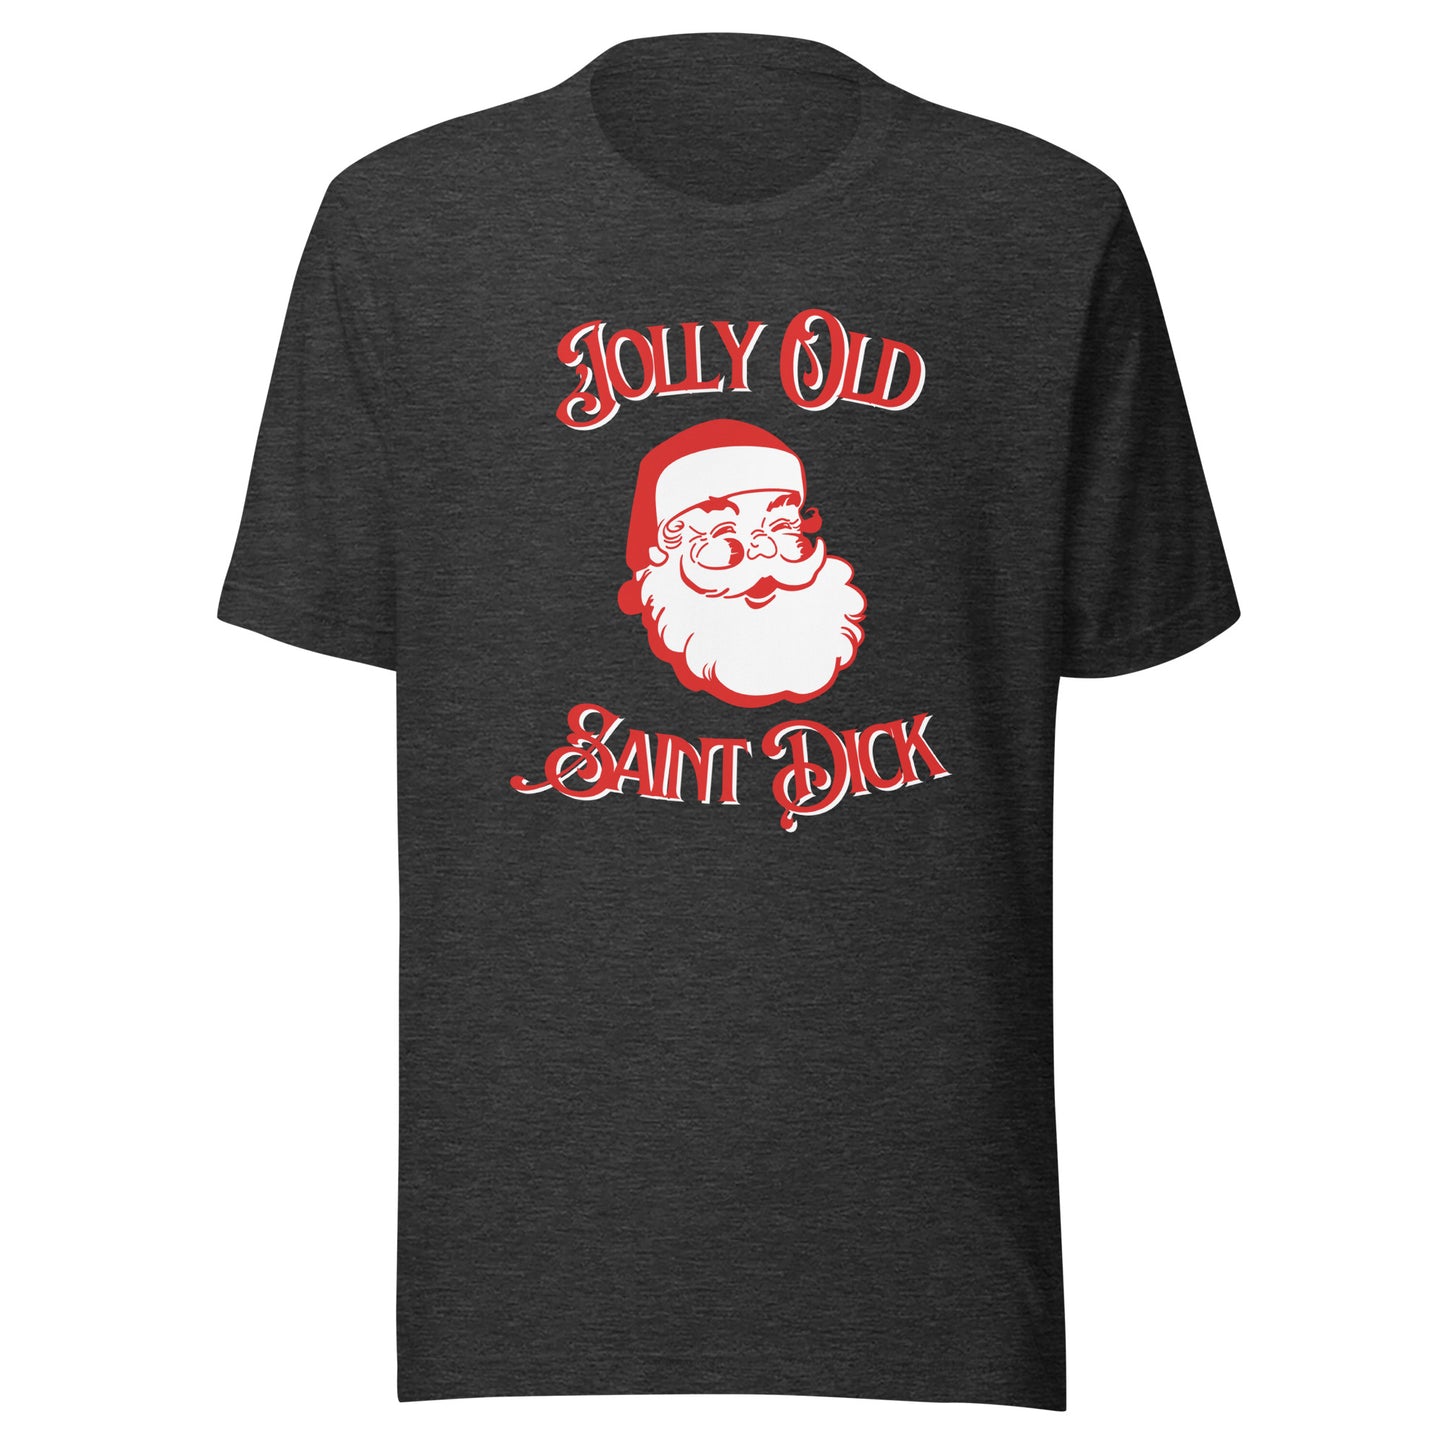 Jolly Old Saint Dick Unisex T-shirt